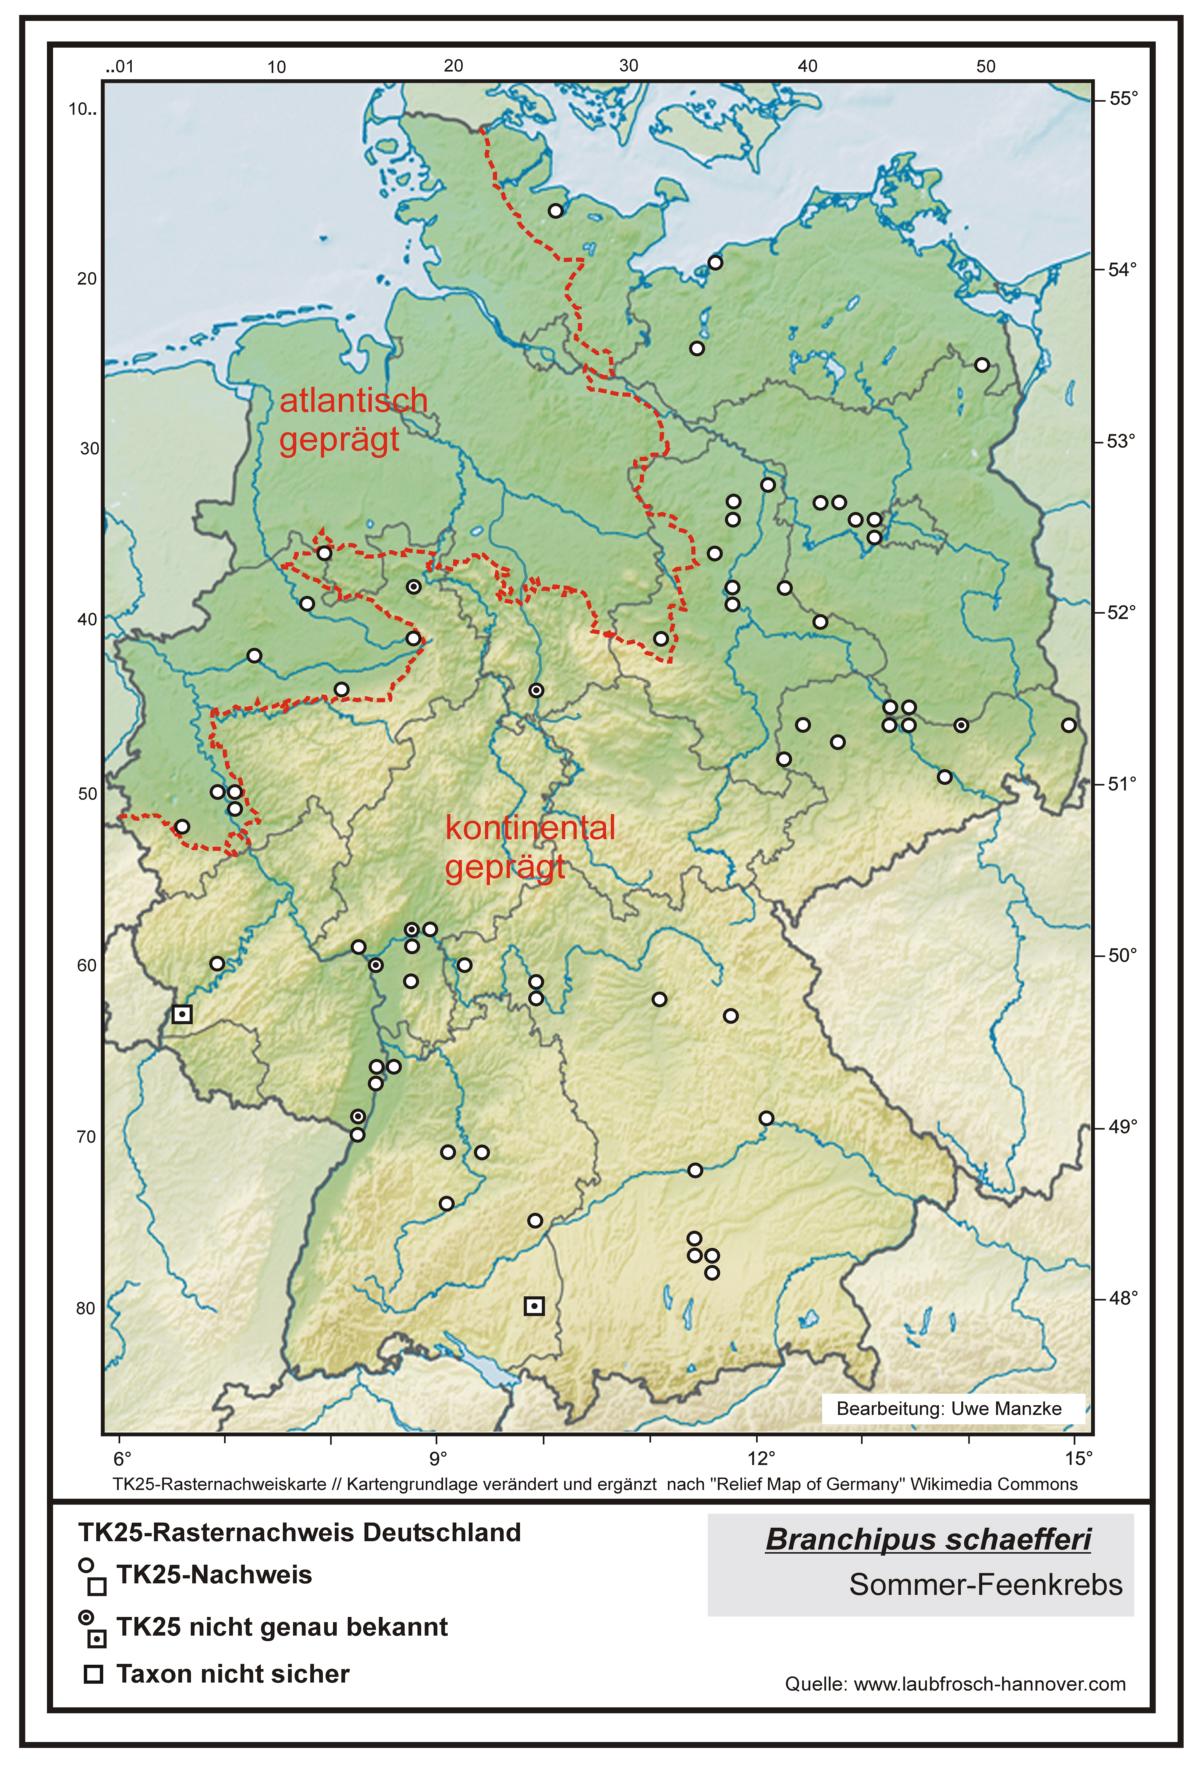 Branchipus schaefferi TK25-Rasternachweiskarte Deutschland, Bearbeitung Uwe Manzke; Kartengrundlage: verändert n. Relief Map of Germany Wikimedia Commons https://commons.wikimedia.org/wiki/File:Relief_Map_of_Germany.svg